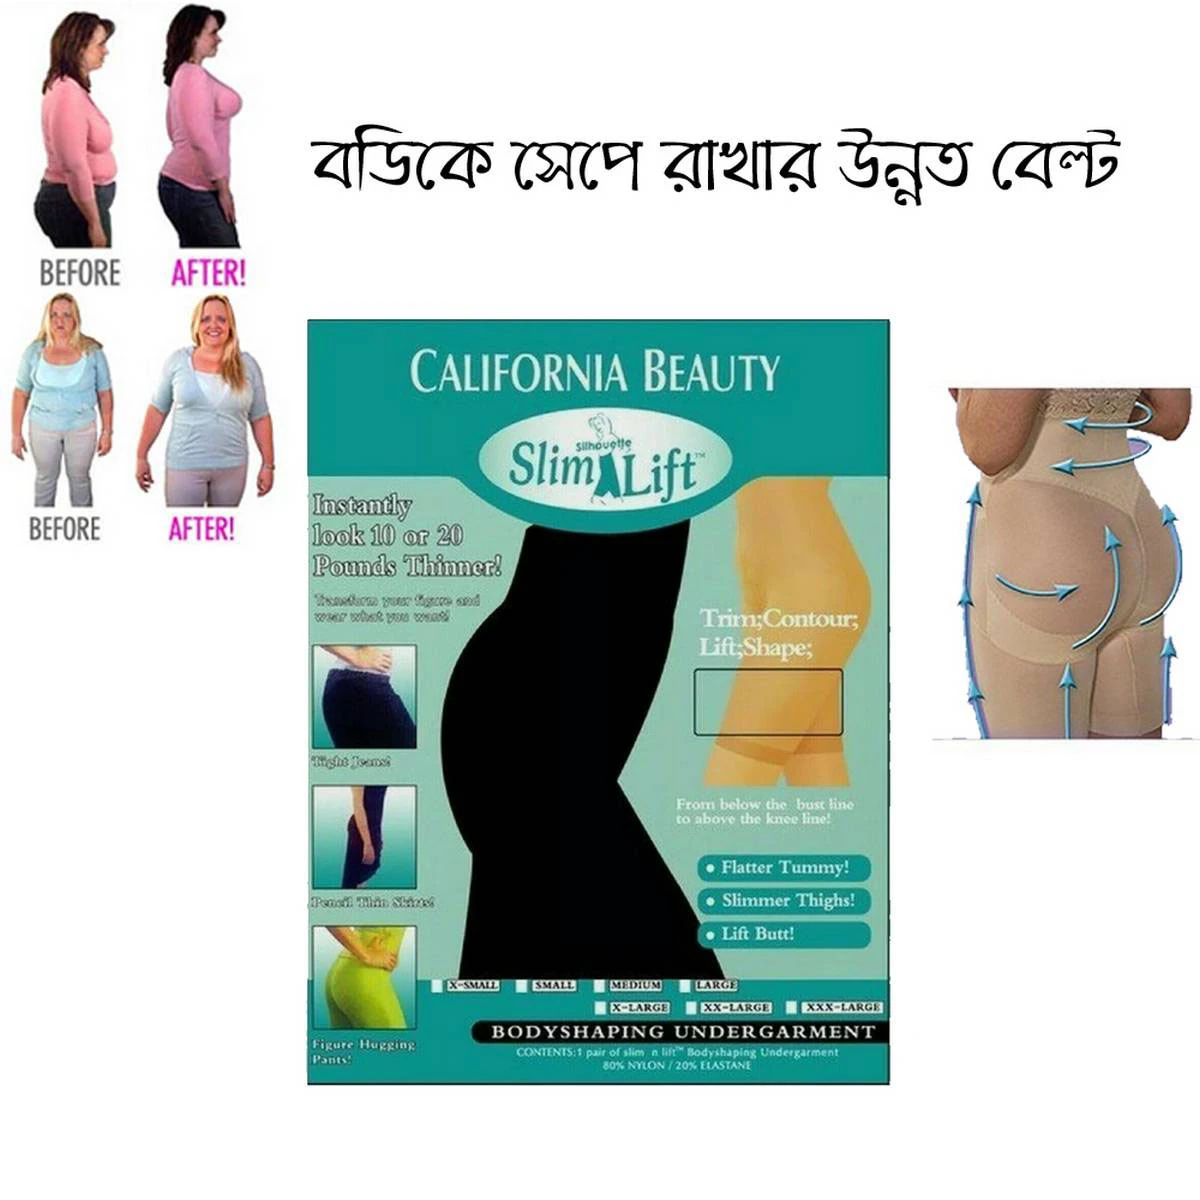 California Beauty – Silhouette Slim N Lift Supreme Body Shaping Undergarment